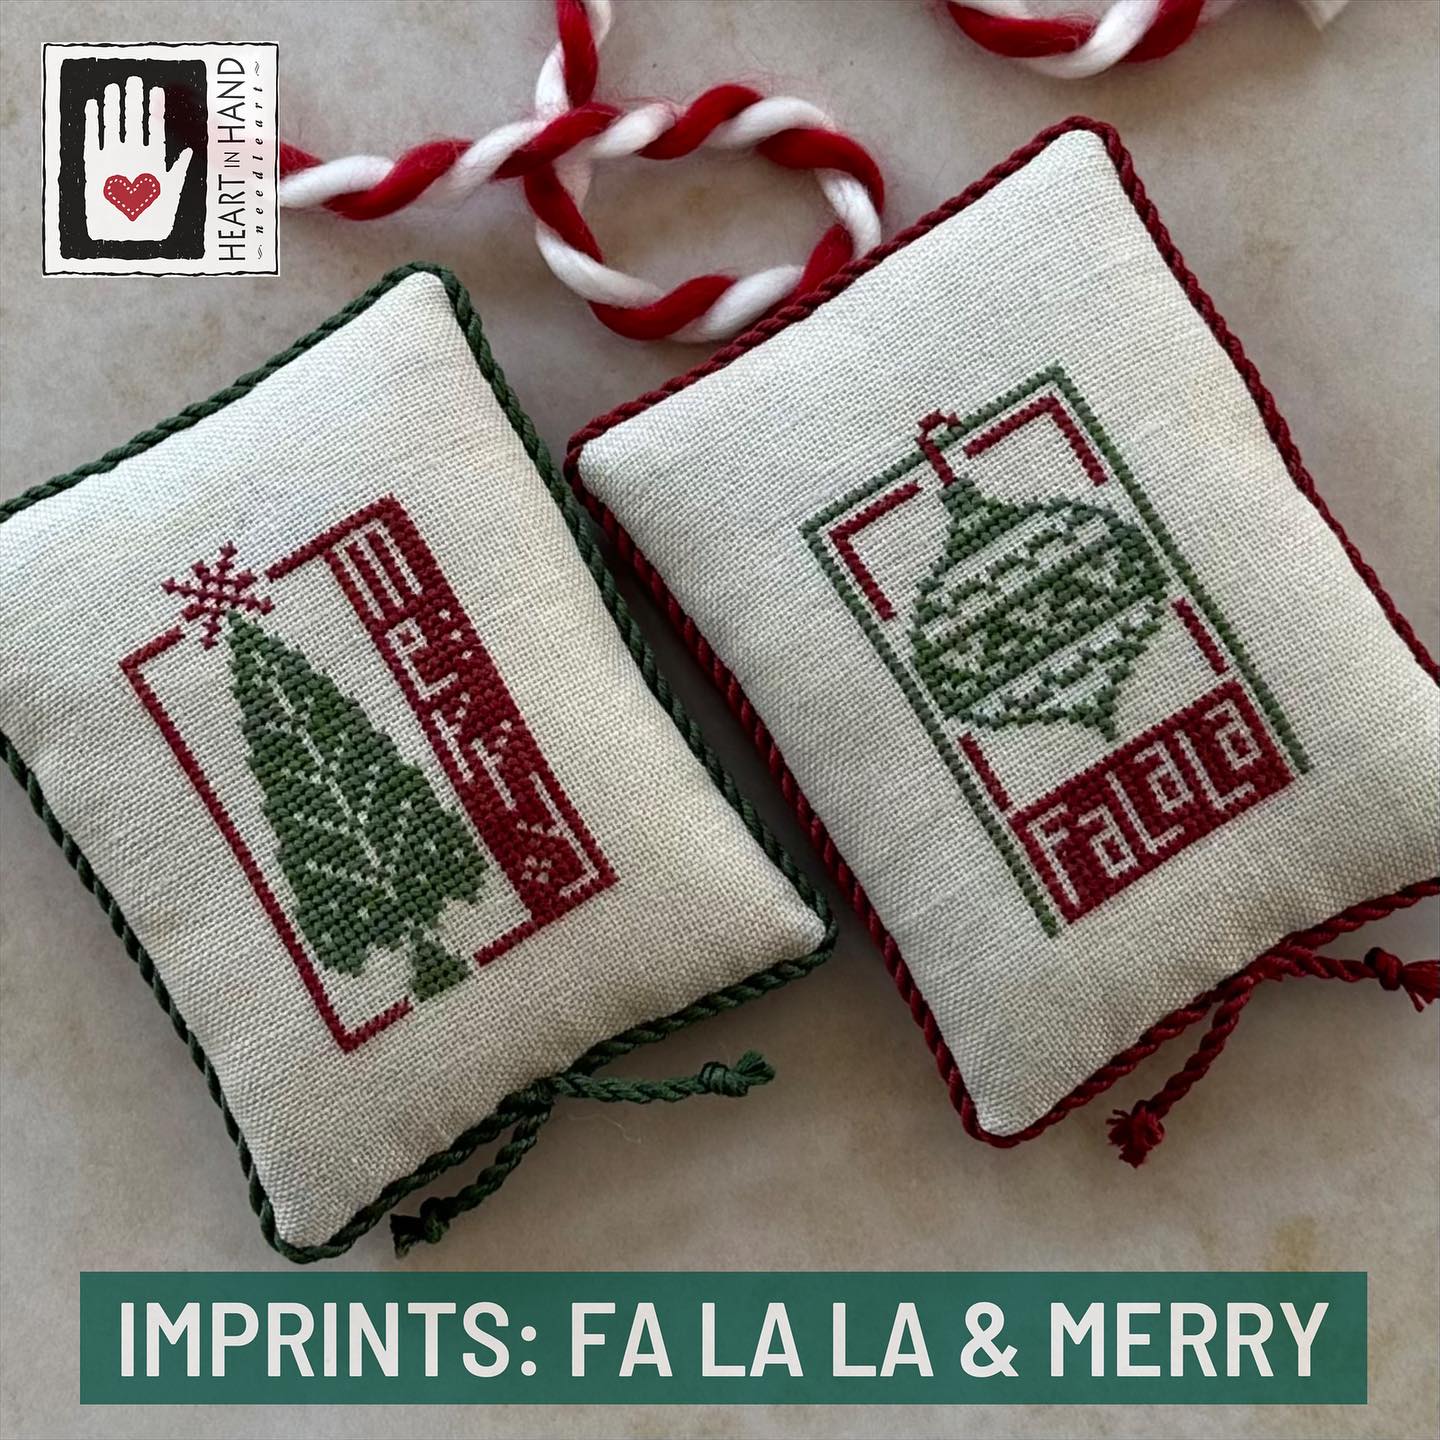 Imprints Fa La La and Merry by Heart in Hand